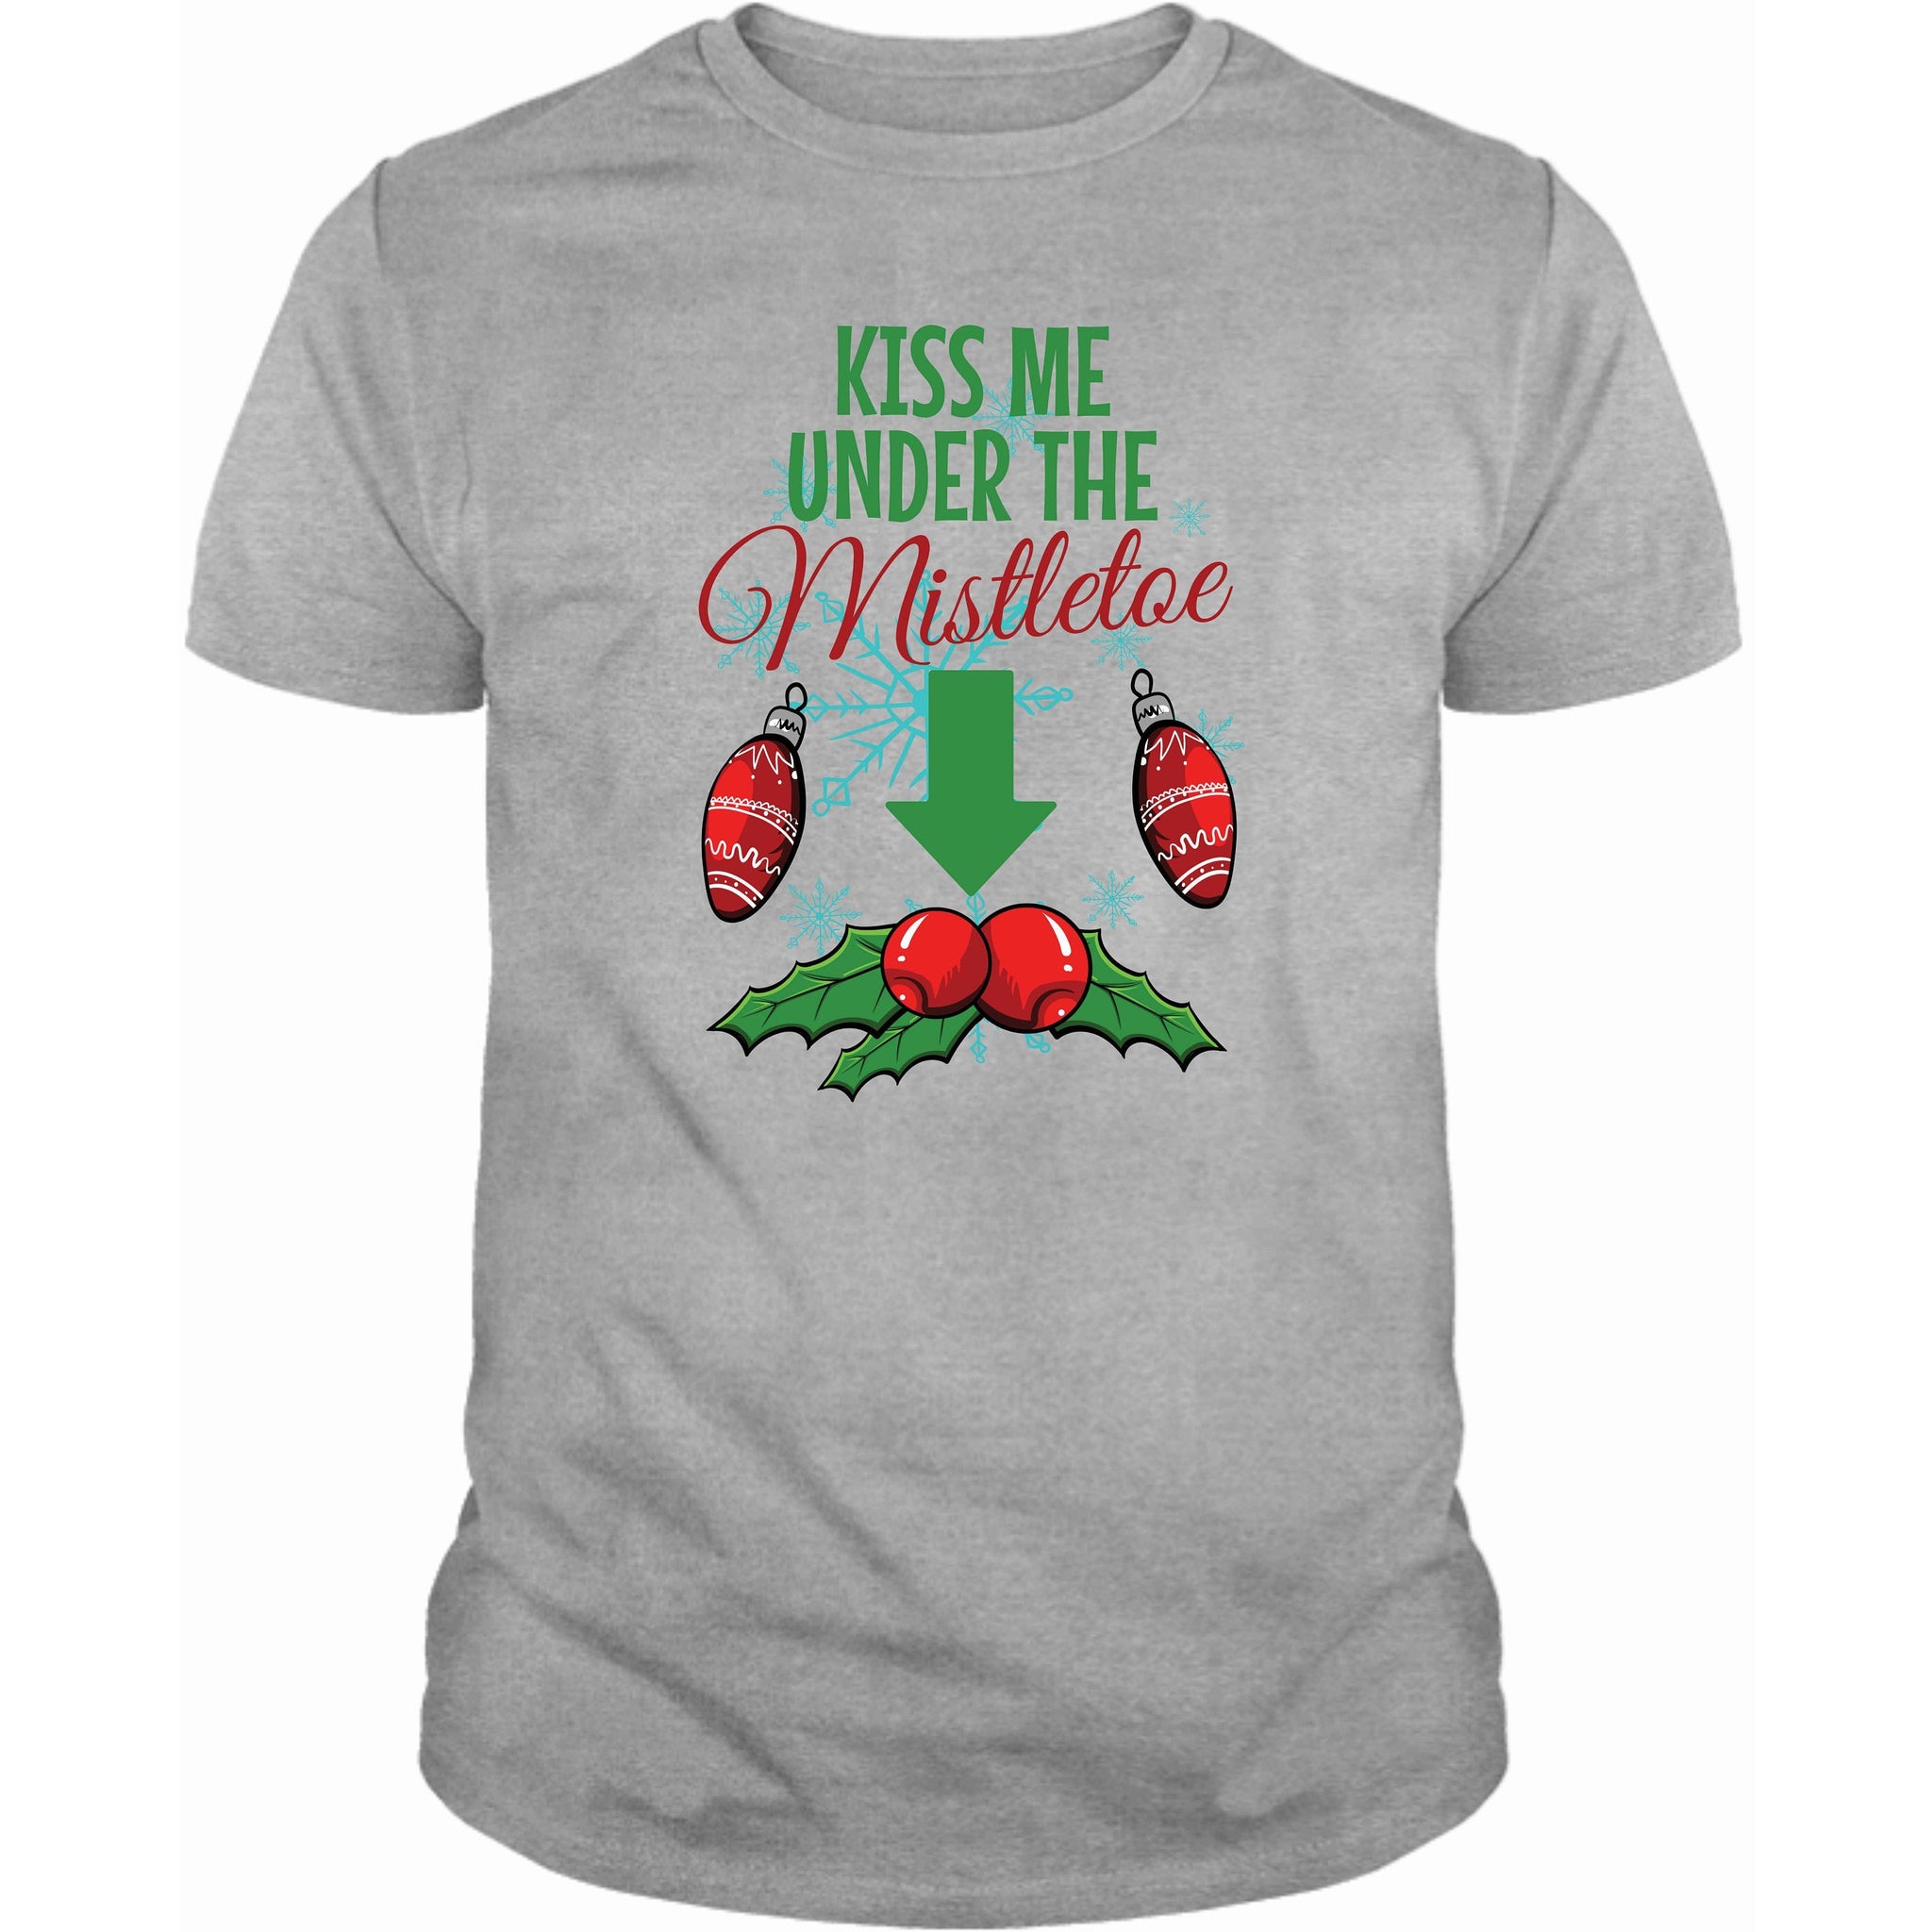 Kiss Me Under the Mistletoe T-Shirt